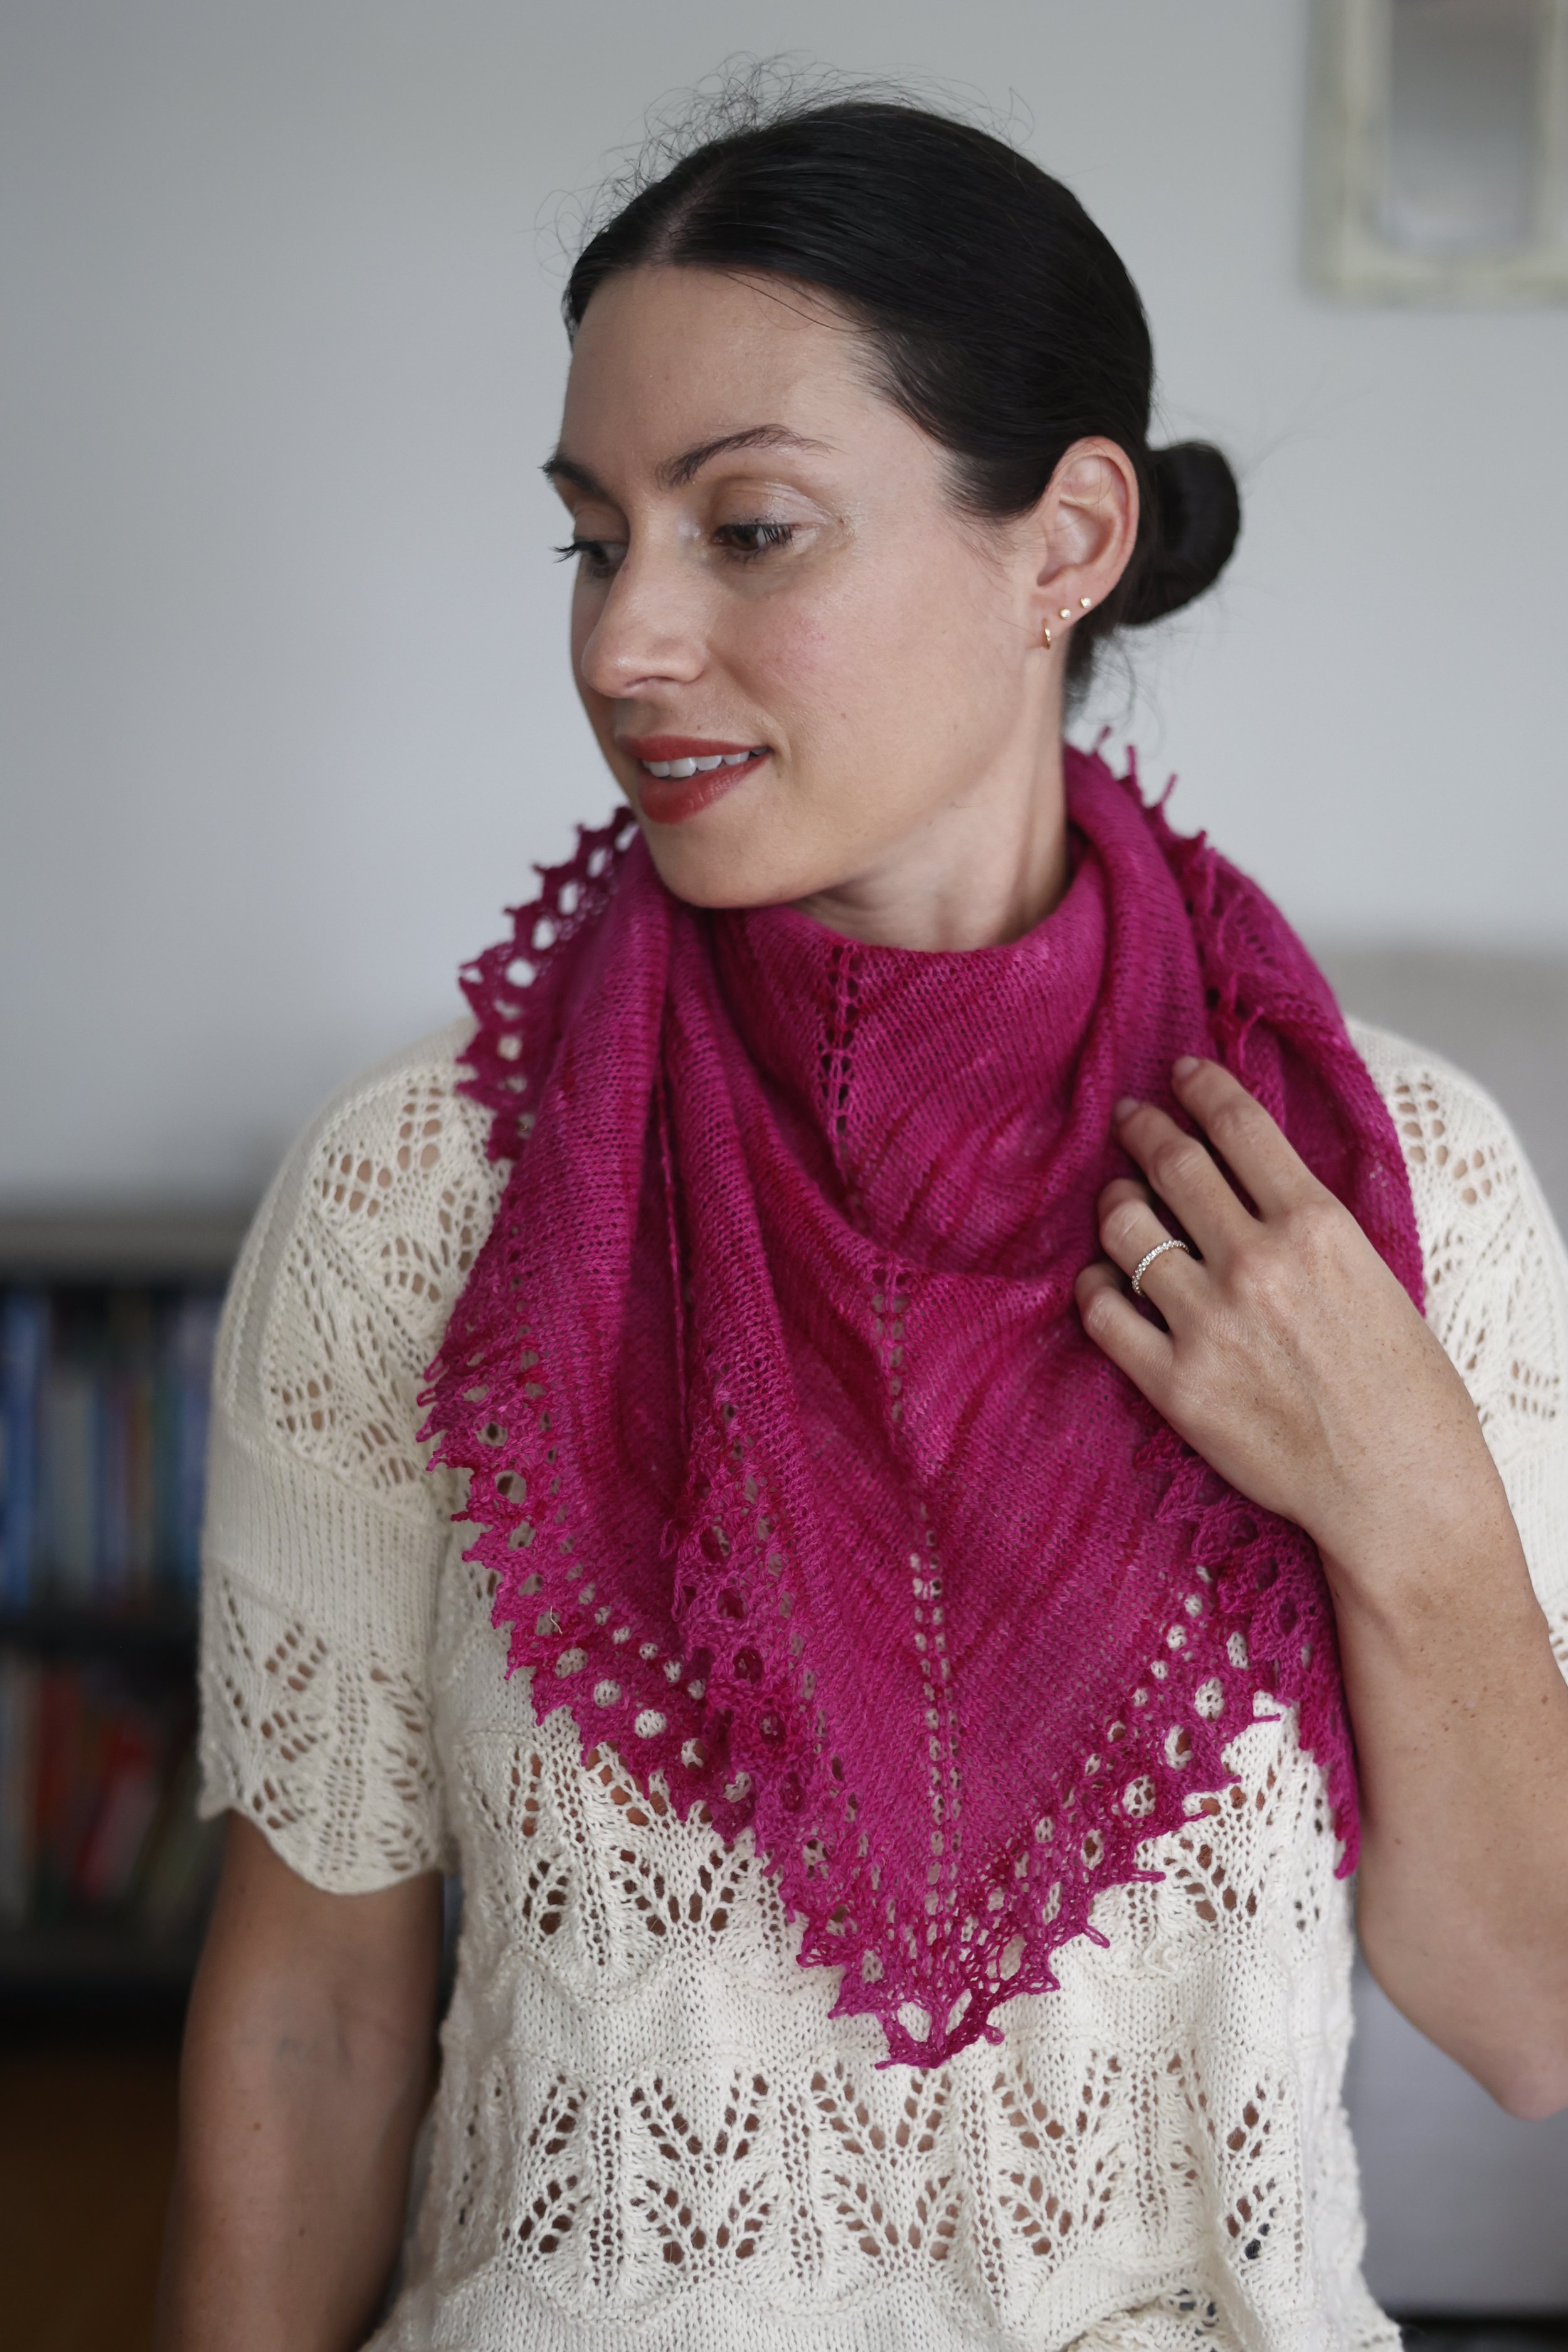 Crochet Triangle Lace Shawl 